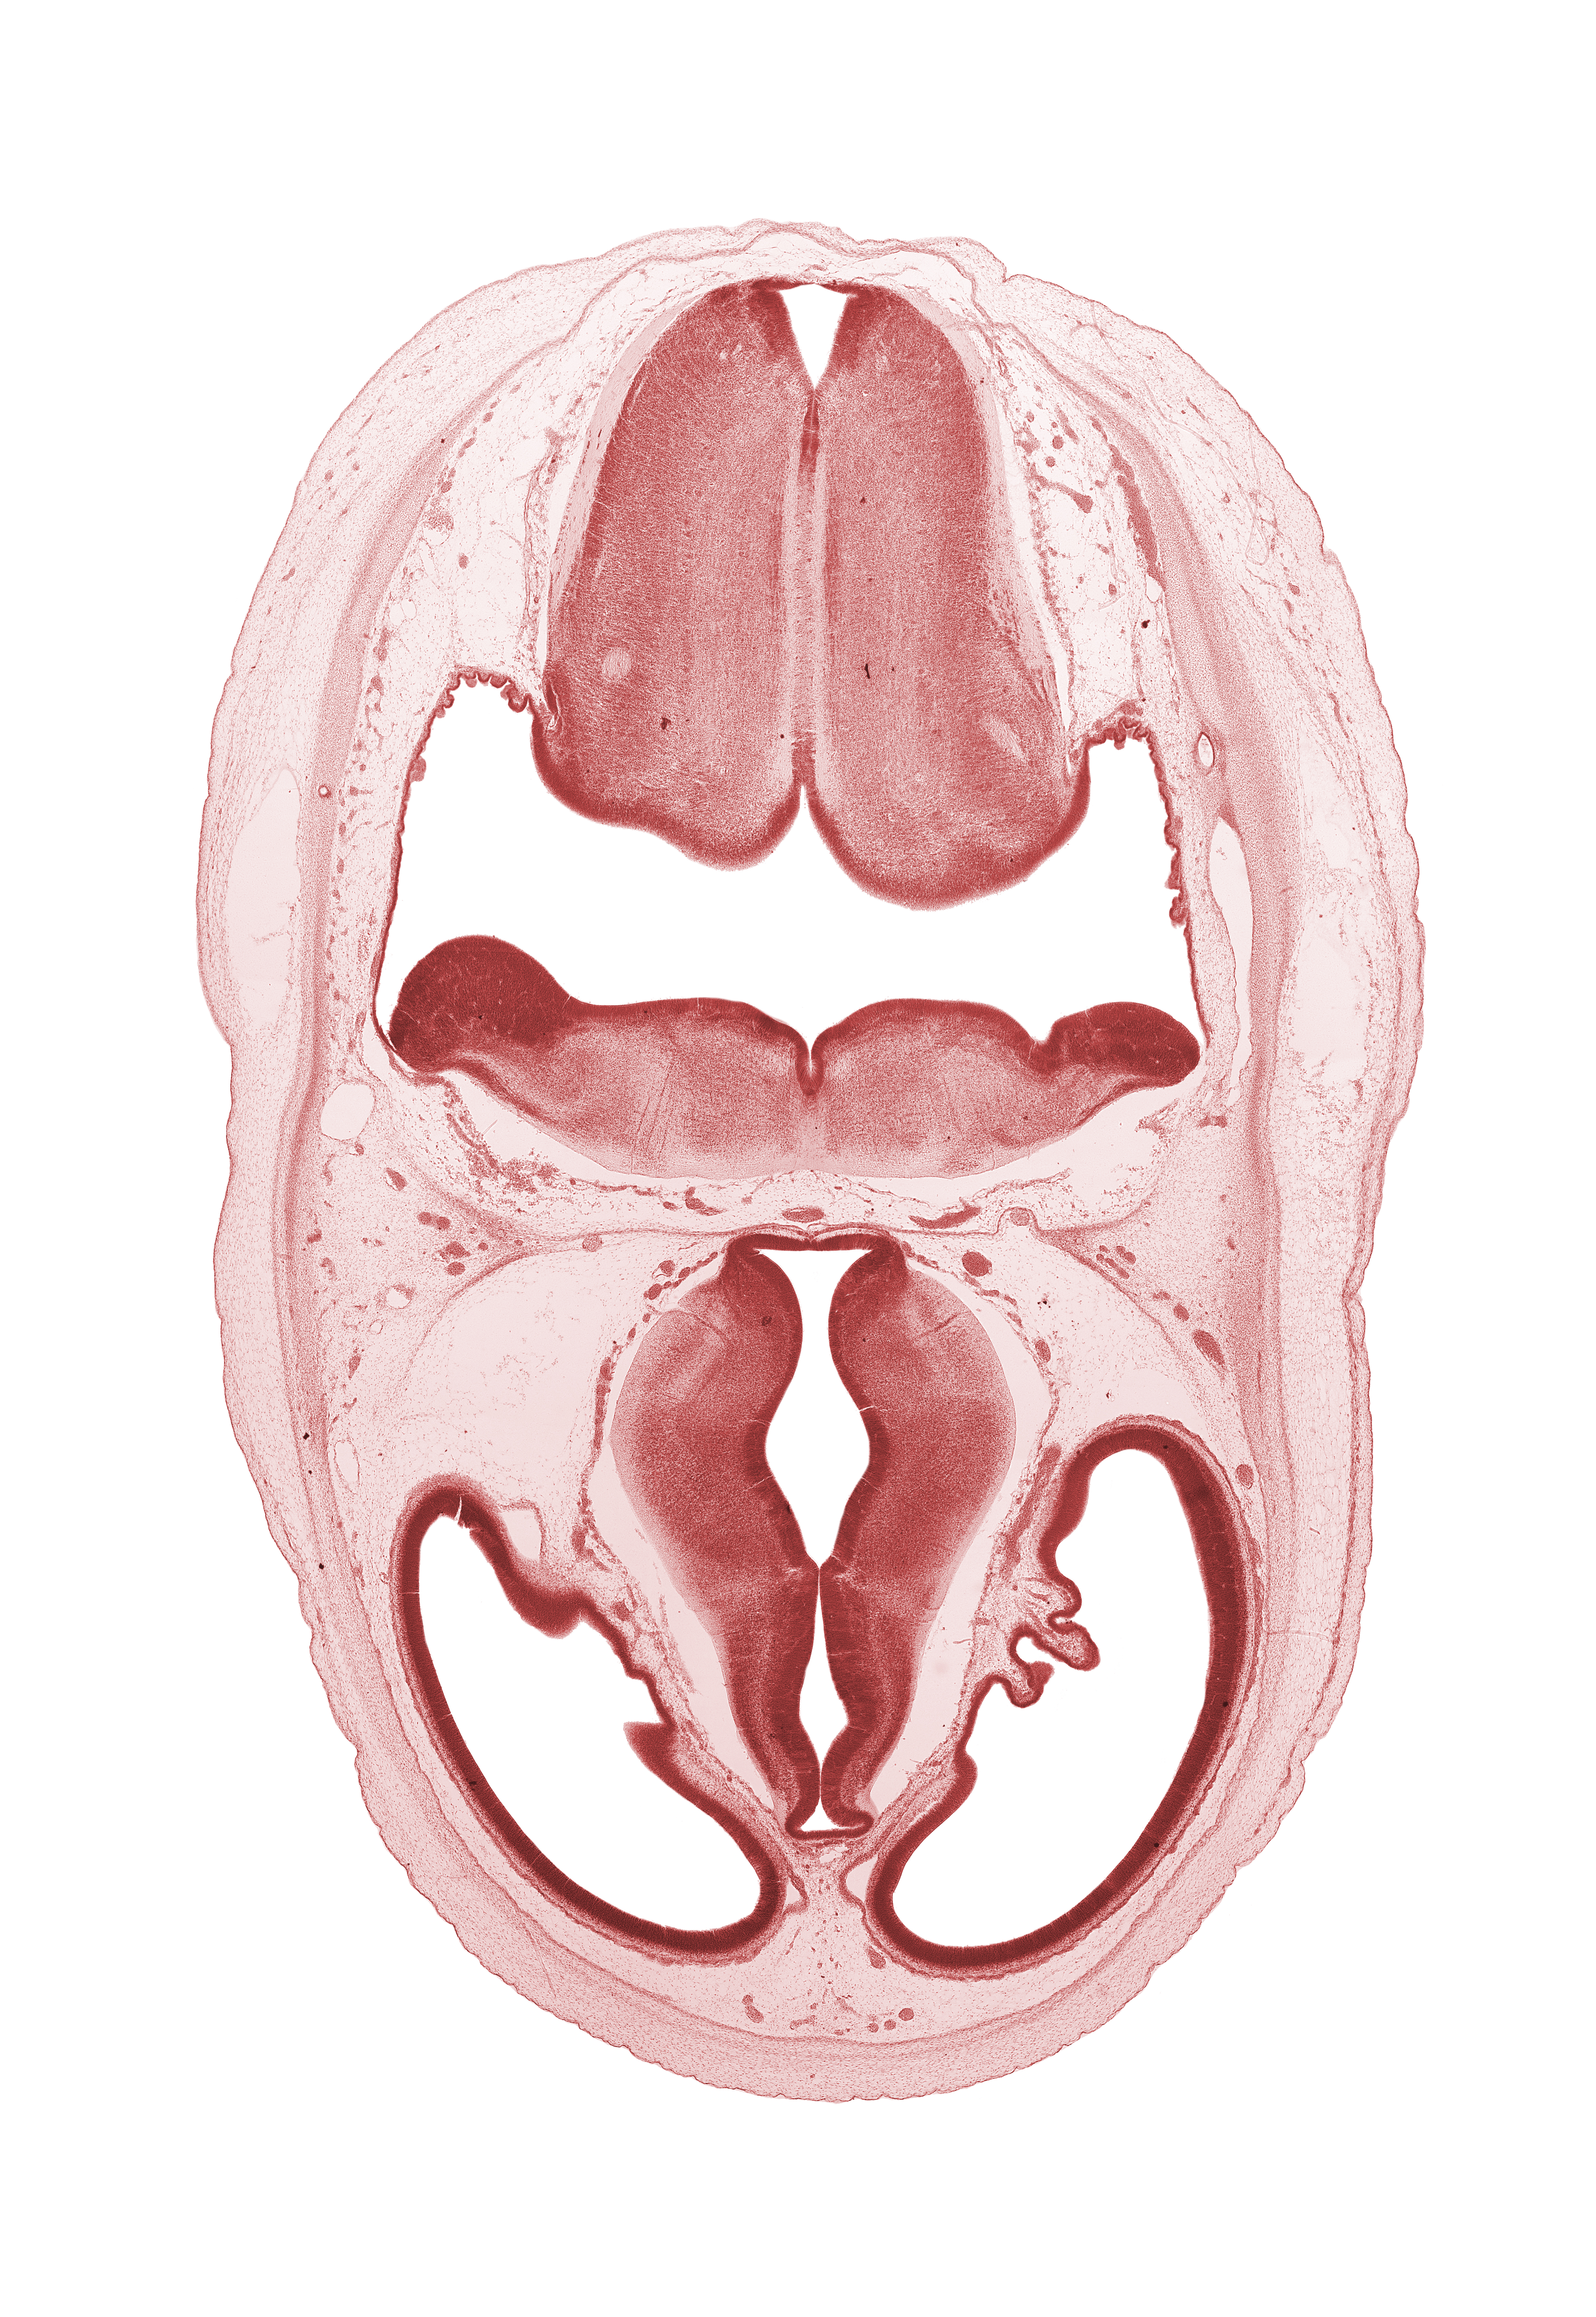 artifact separation(s), choroid plexus, dorsal thalamus, dural venous sinus, endolymphatic duct, loose connective tissue, marginal ridge, median sulcus, obex, oculomotor nerve (CN III), osteogenic layer, pons region (metencephalon), posterior communicating artery, sensory decussation, surface ectoderm, third ventricle, ventral thalamus